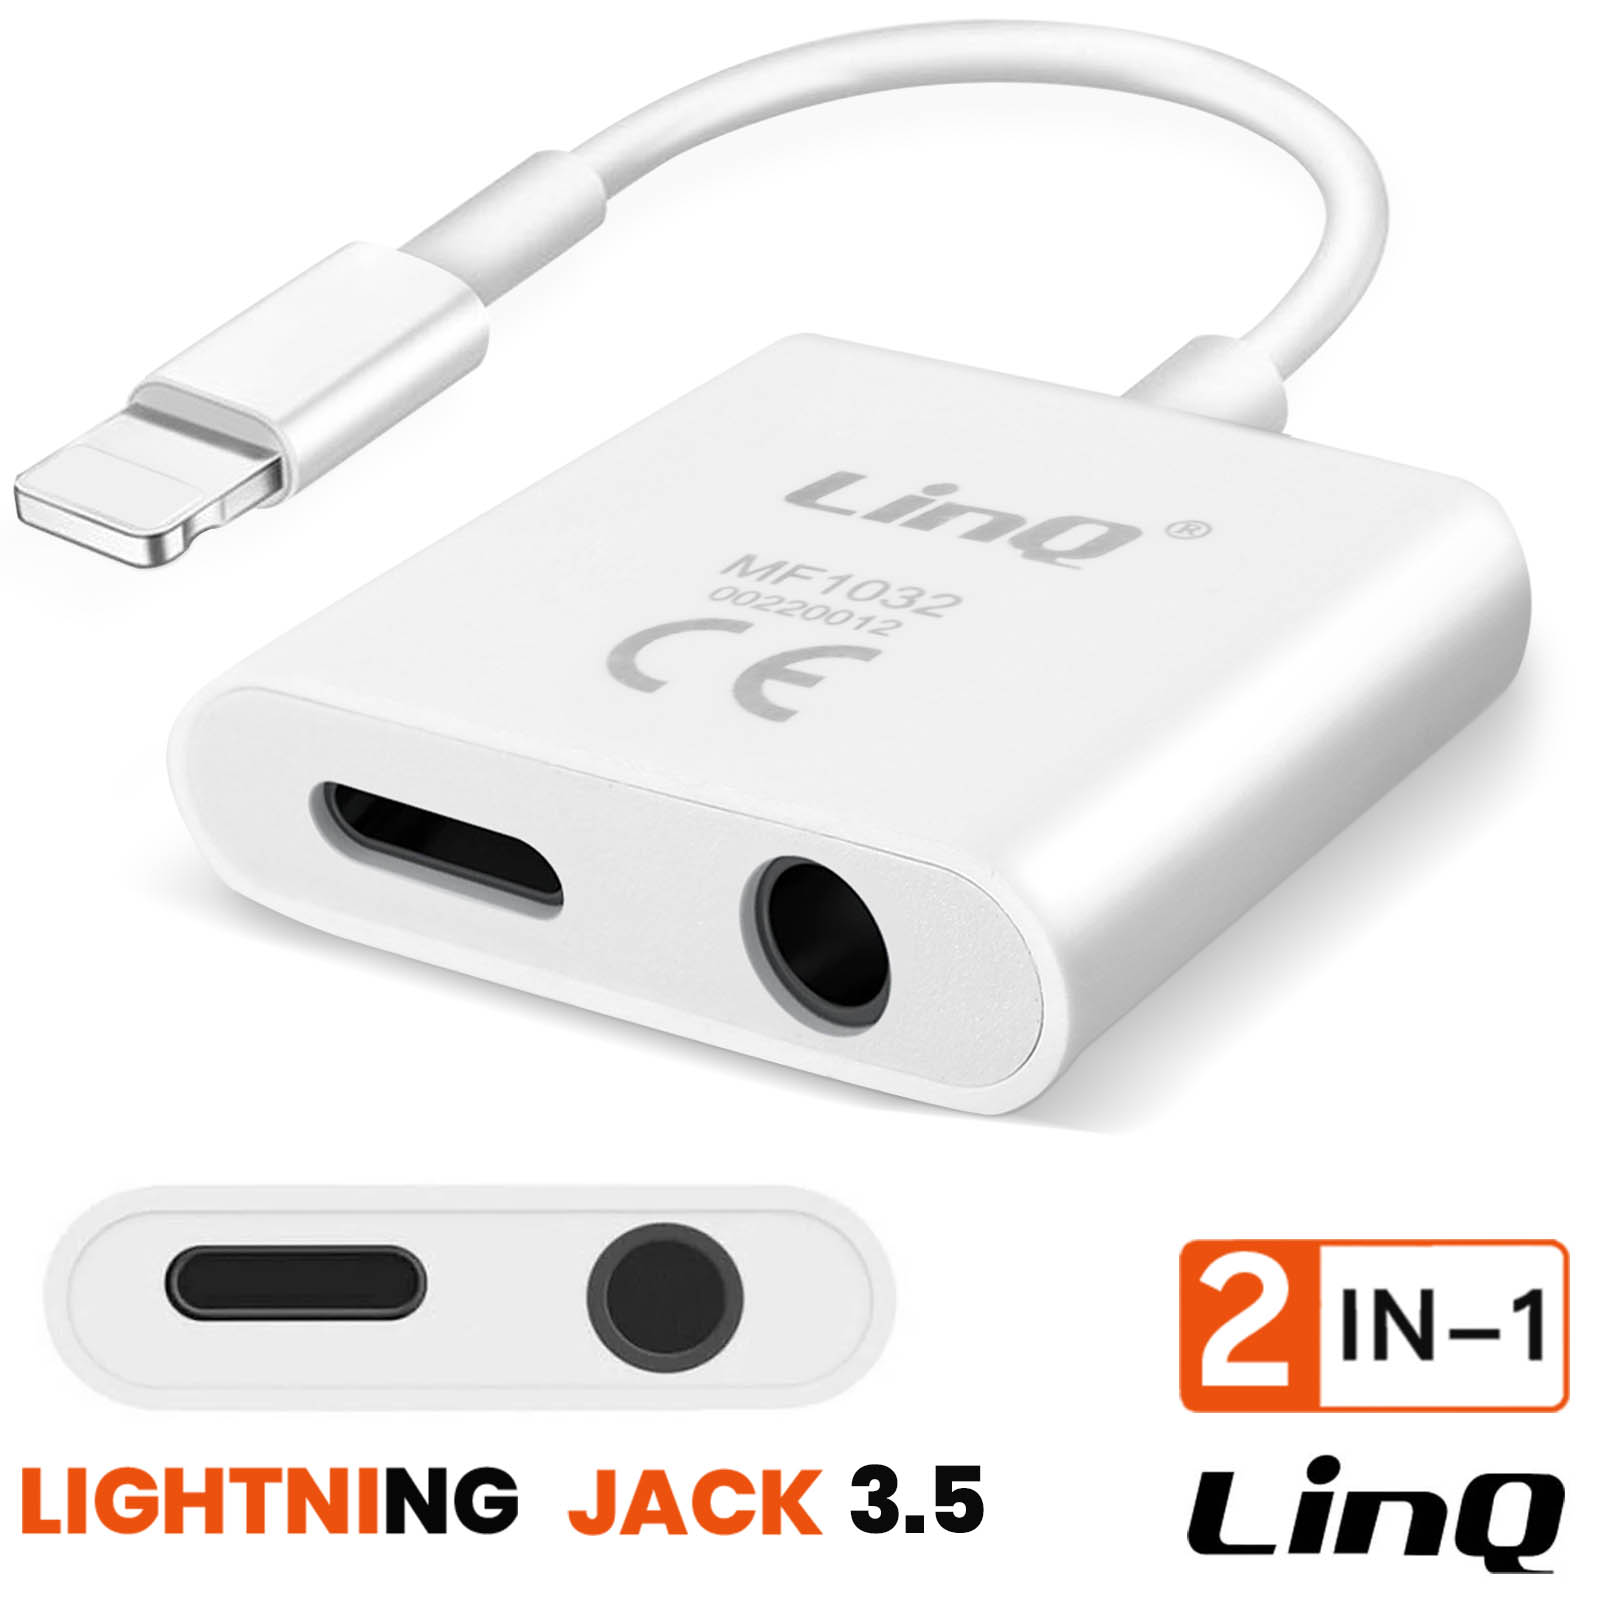 Adaptador Lightning a Jack 3.5mm Iphone, AU112